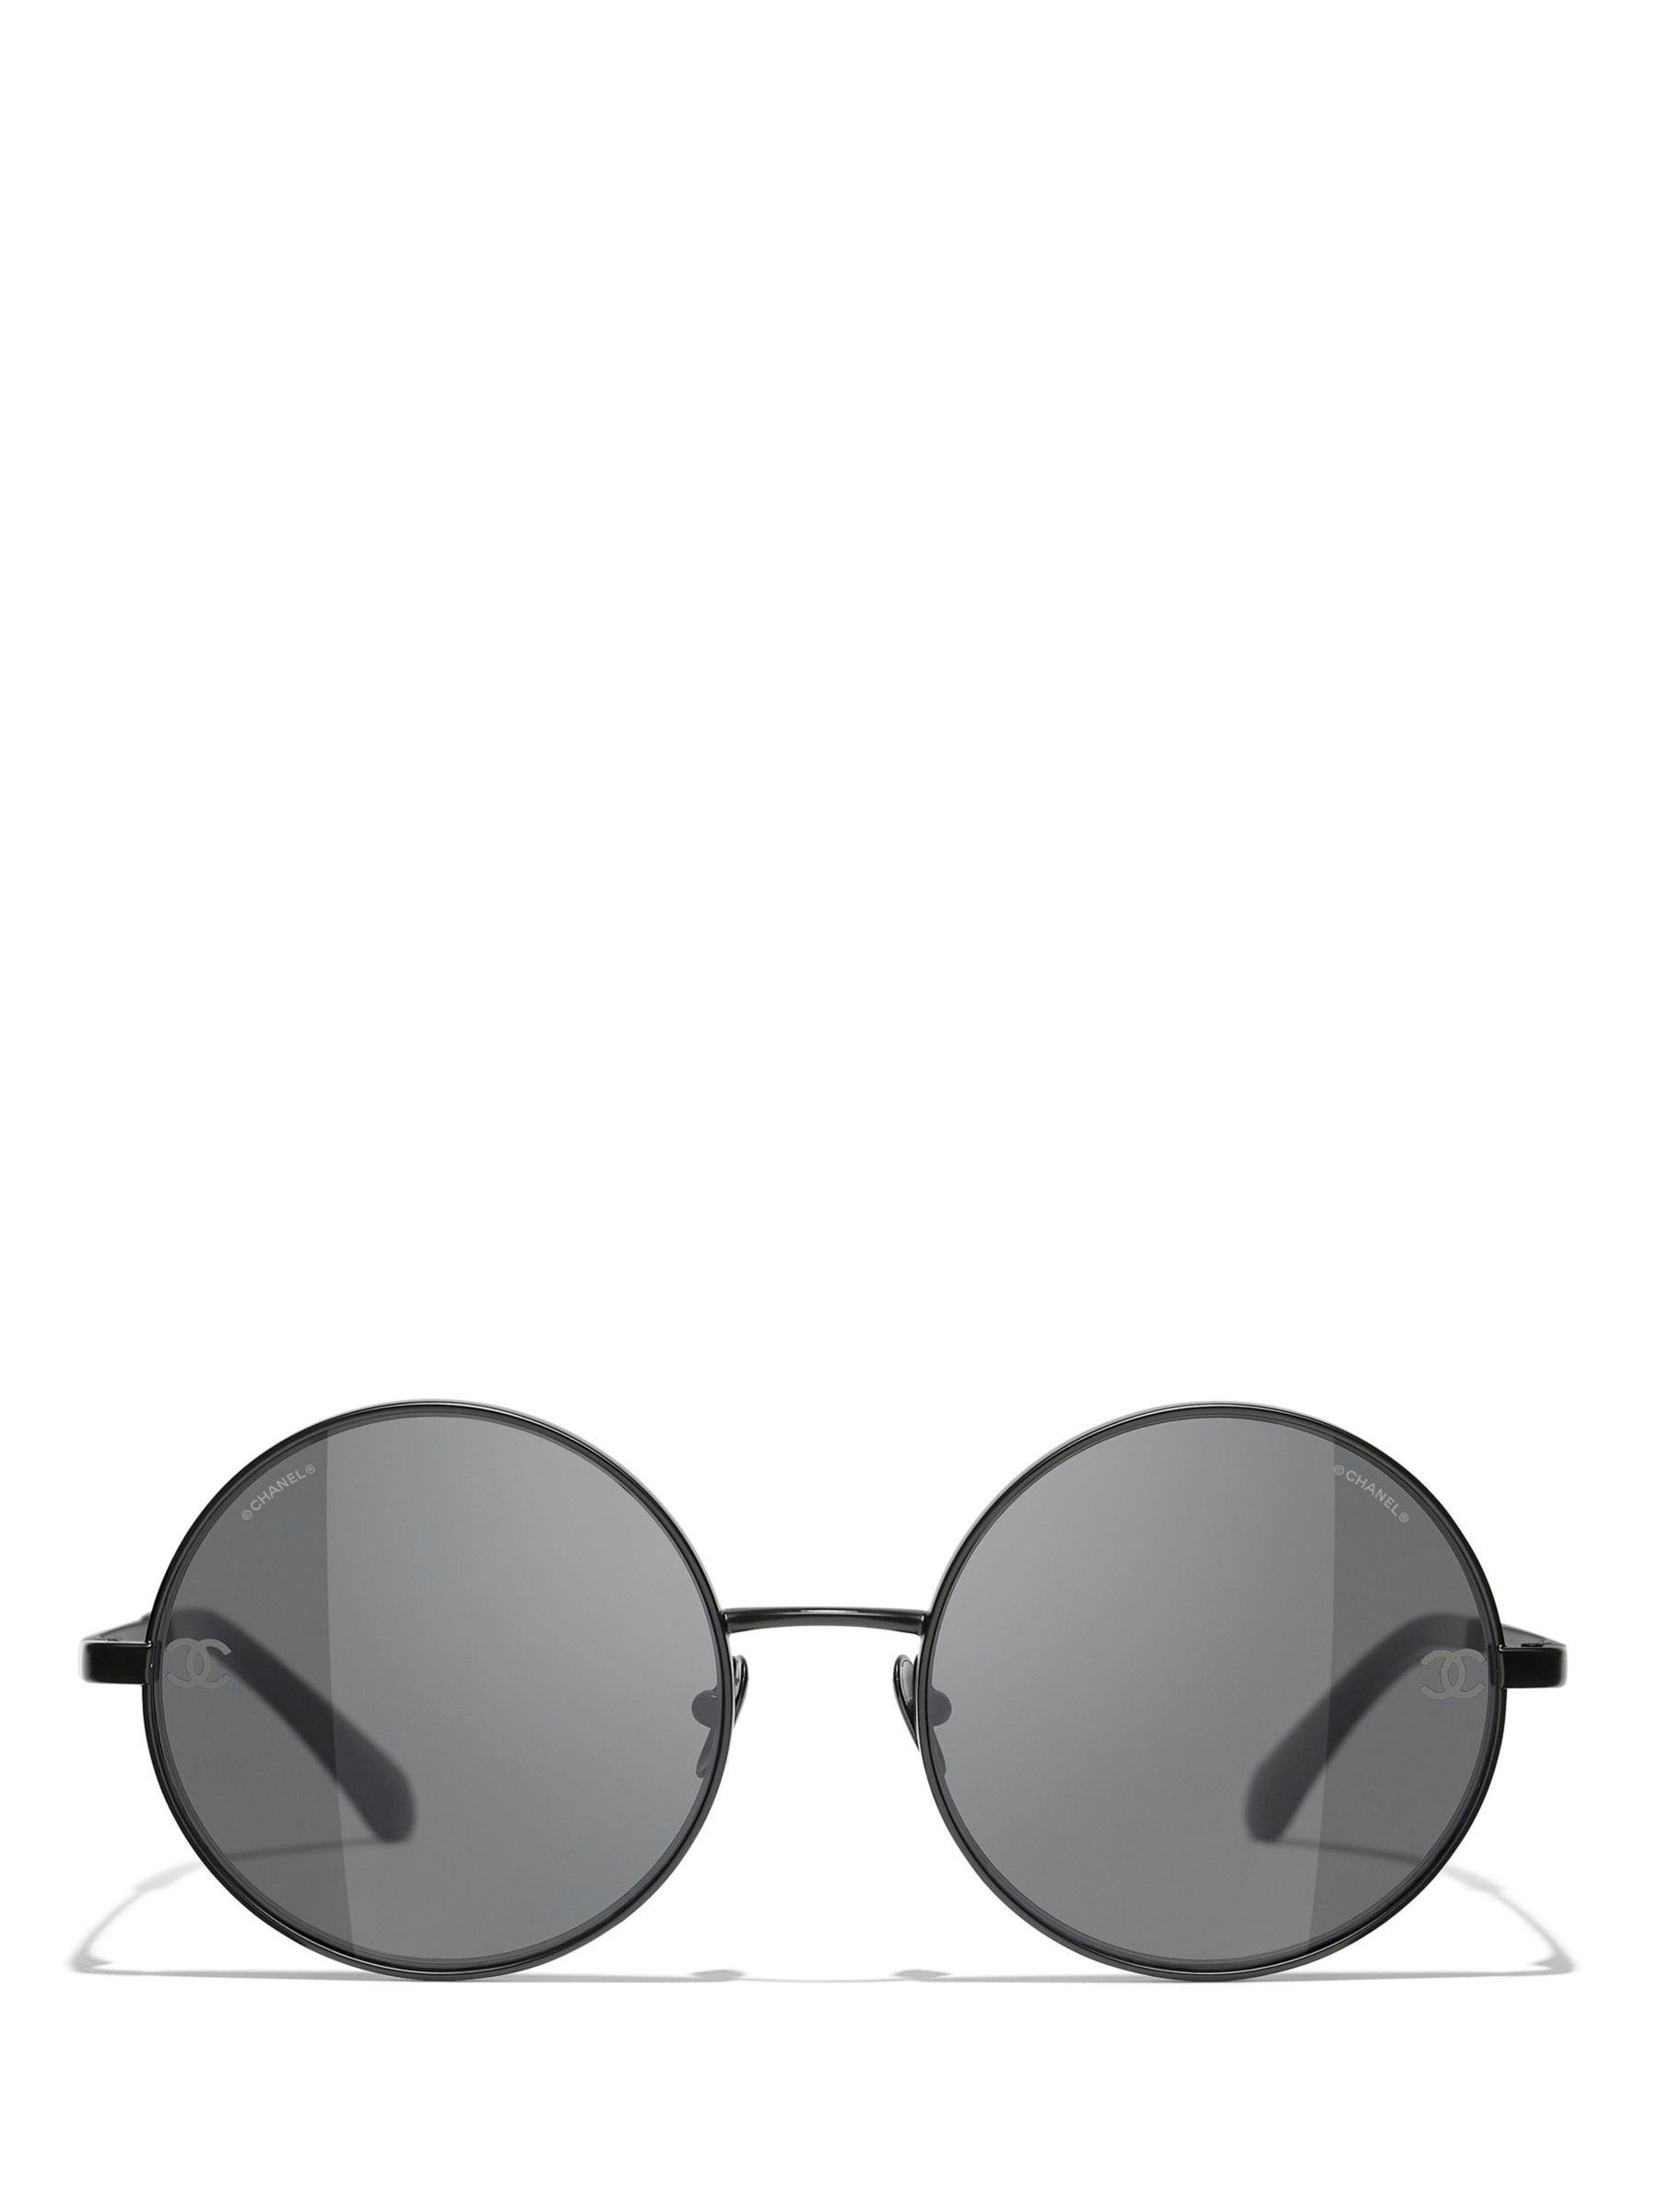 Sunglasses Chanel Grey in Metal - 24086616